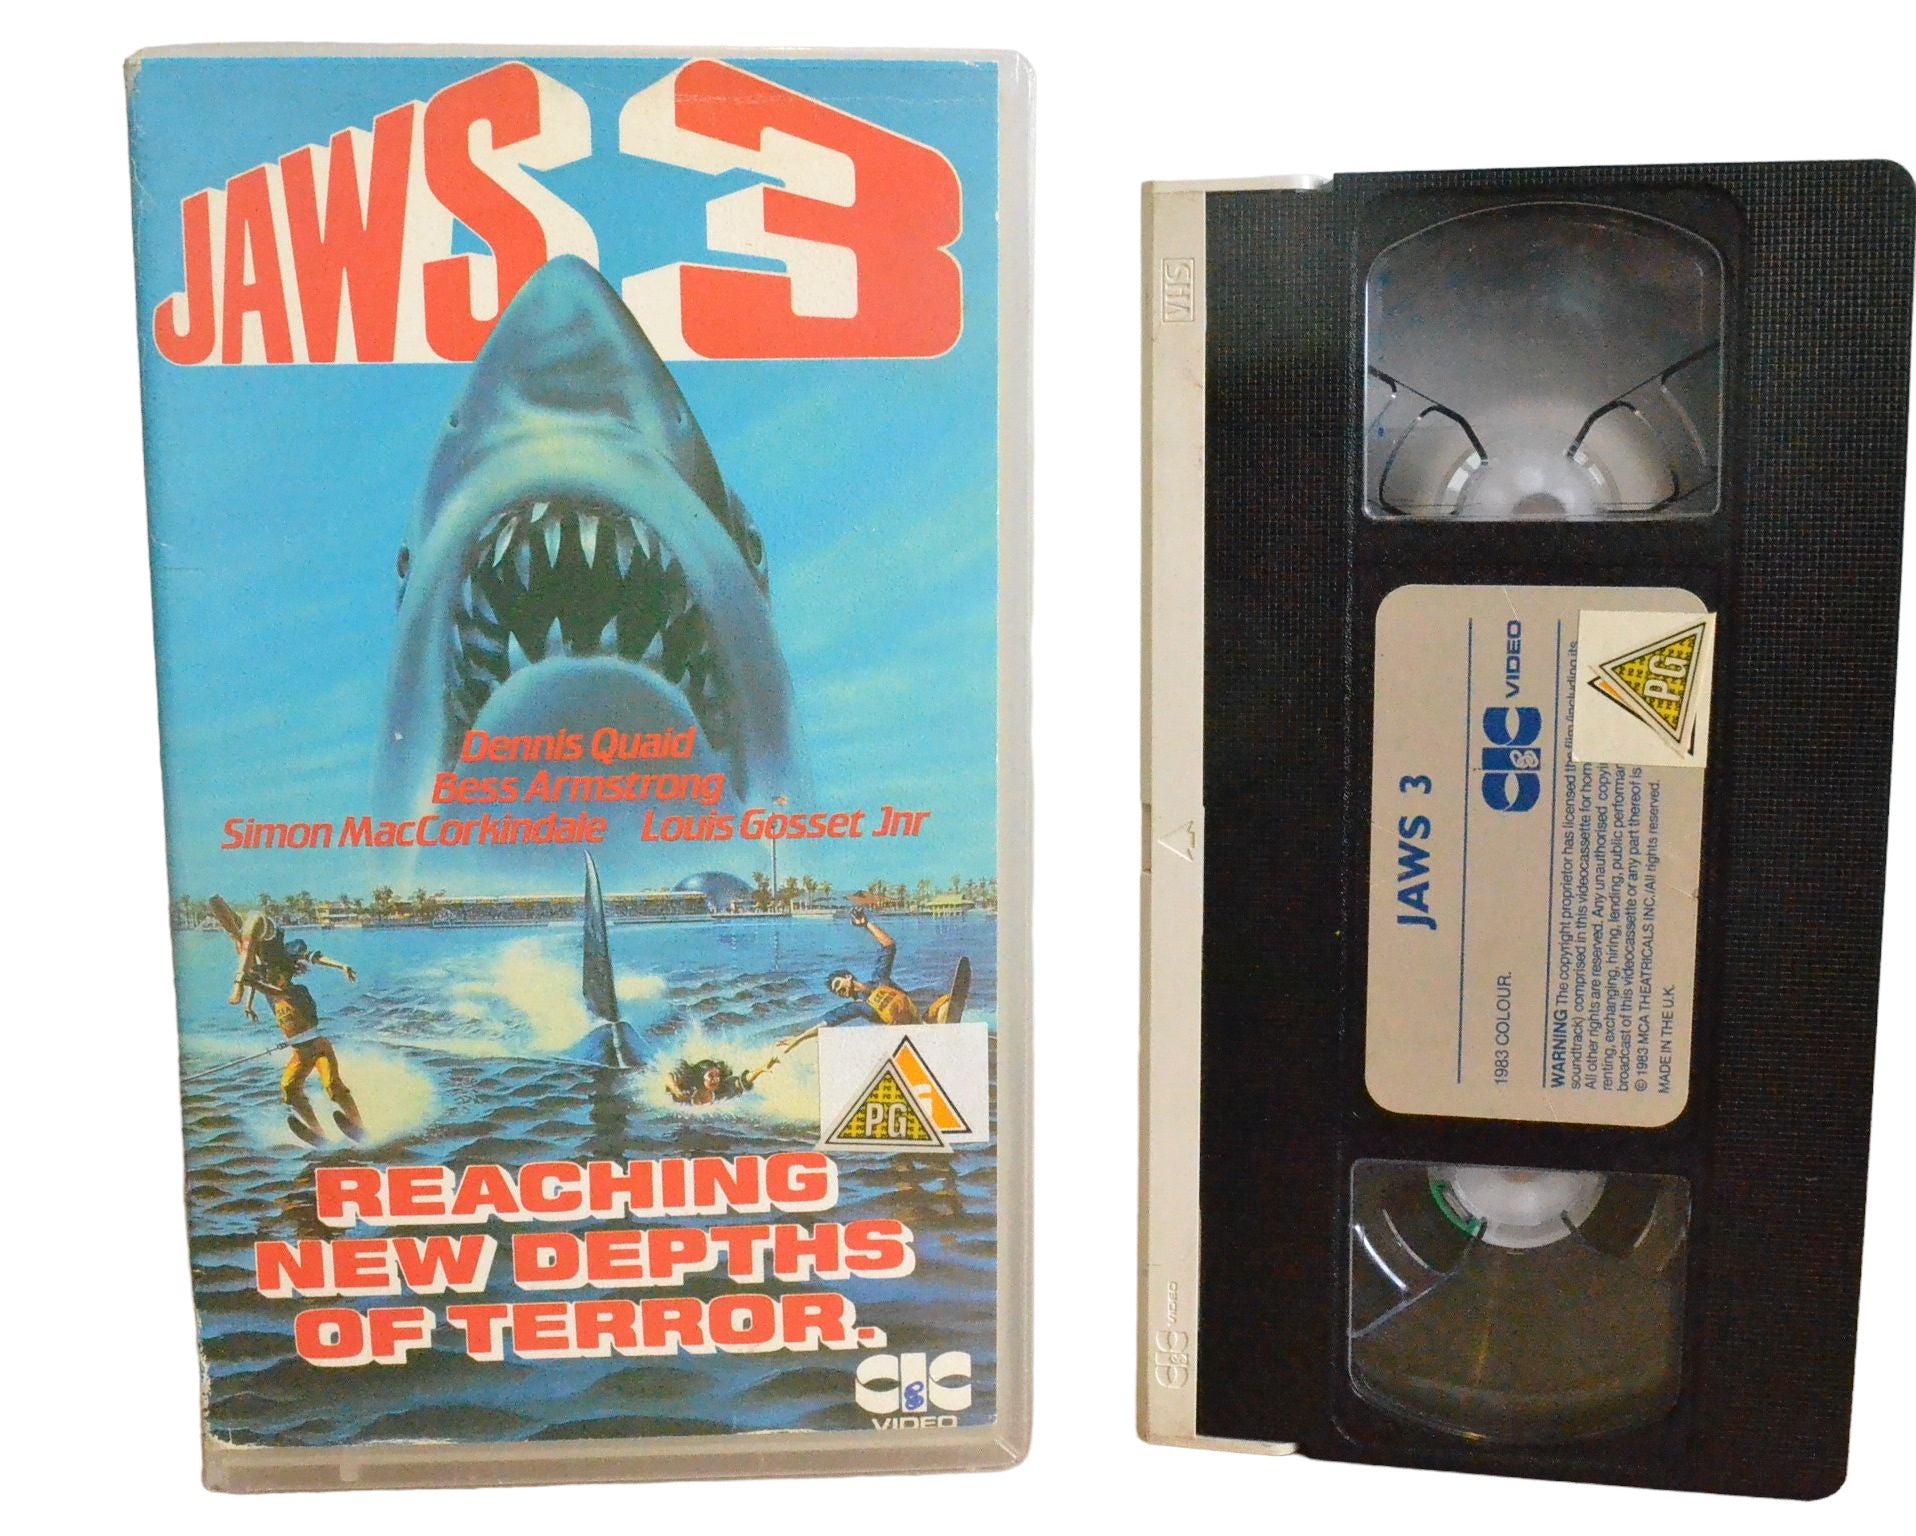 Jaws 3 (Reaching New Depths of Terror) - Dennis Quaid - CIC Video - VH-103 - Horror - Precert - Pal - VHS-